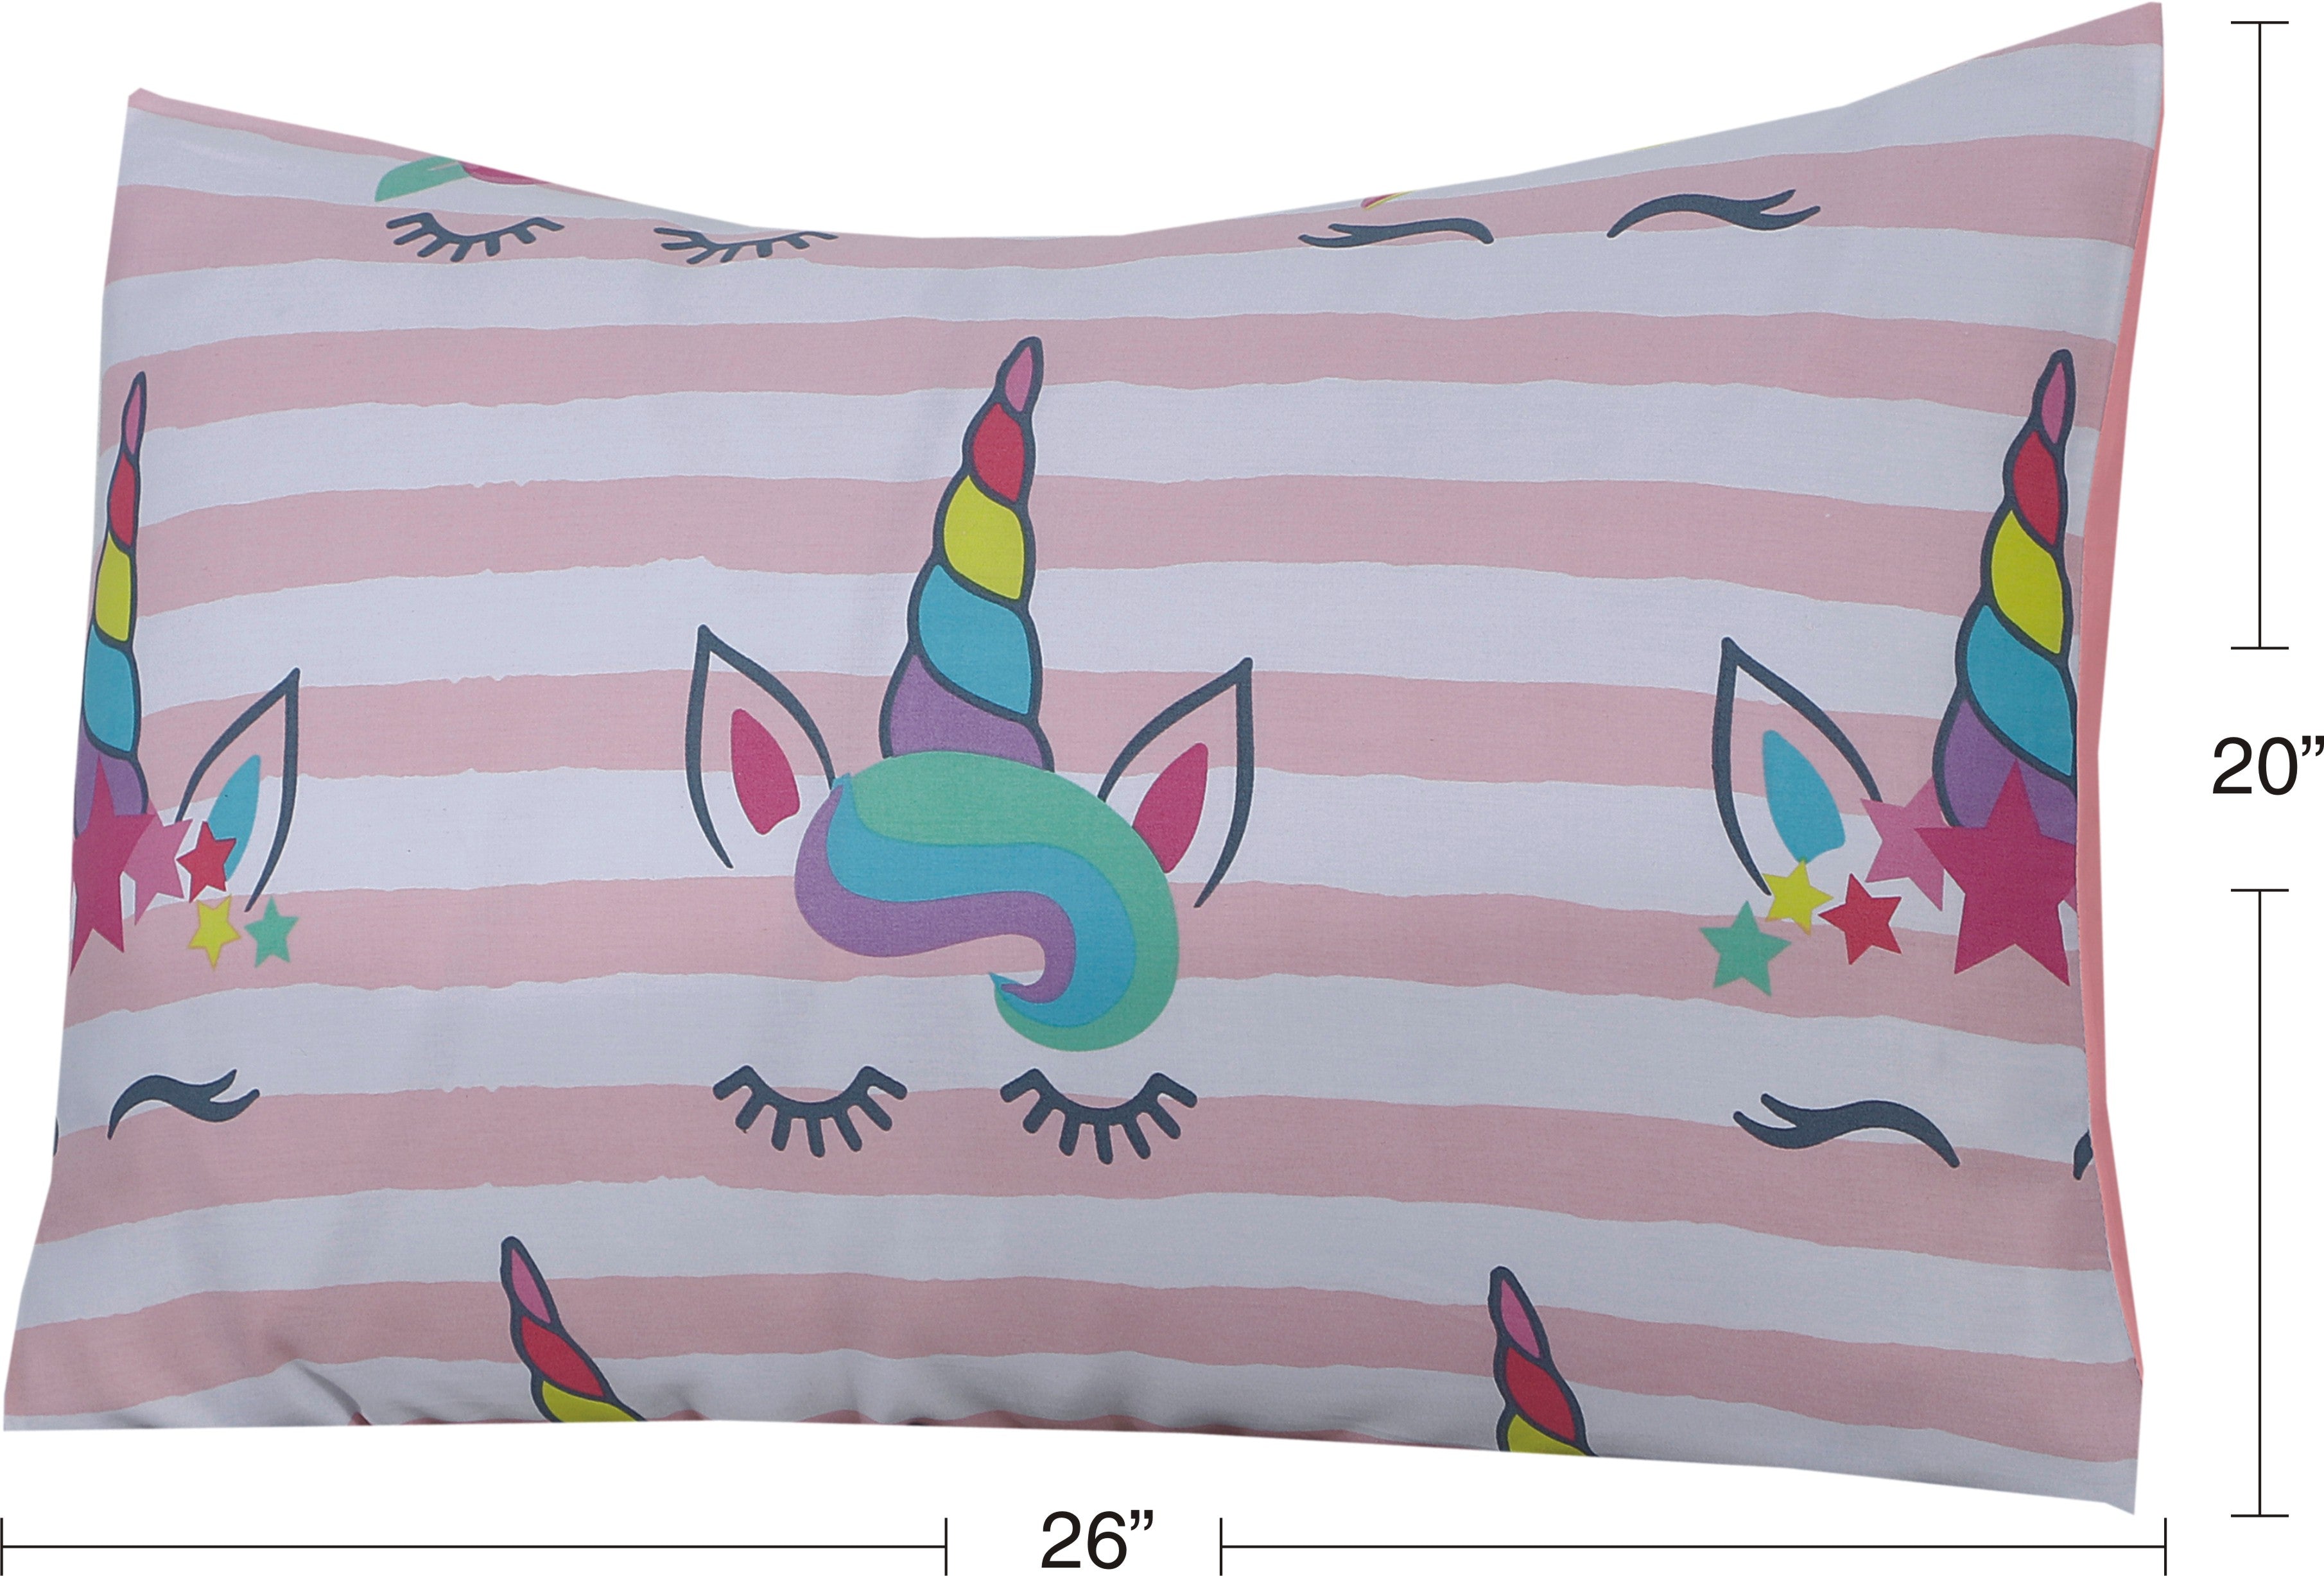 Kids bedding - Duvet Cover - Twin Size - Magical Unicorn print